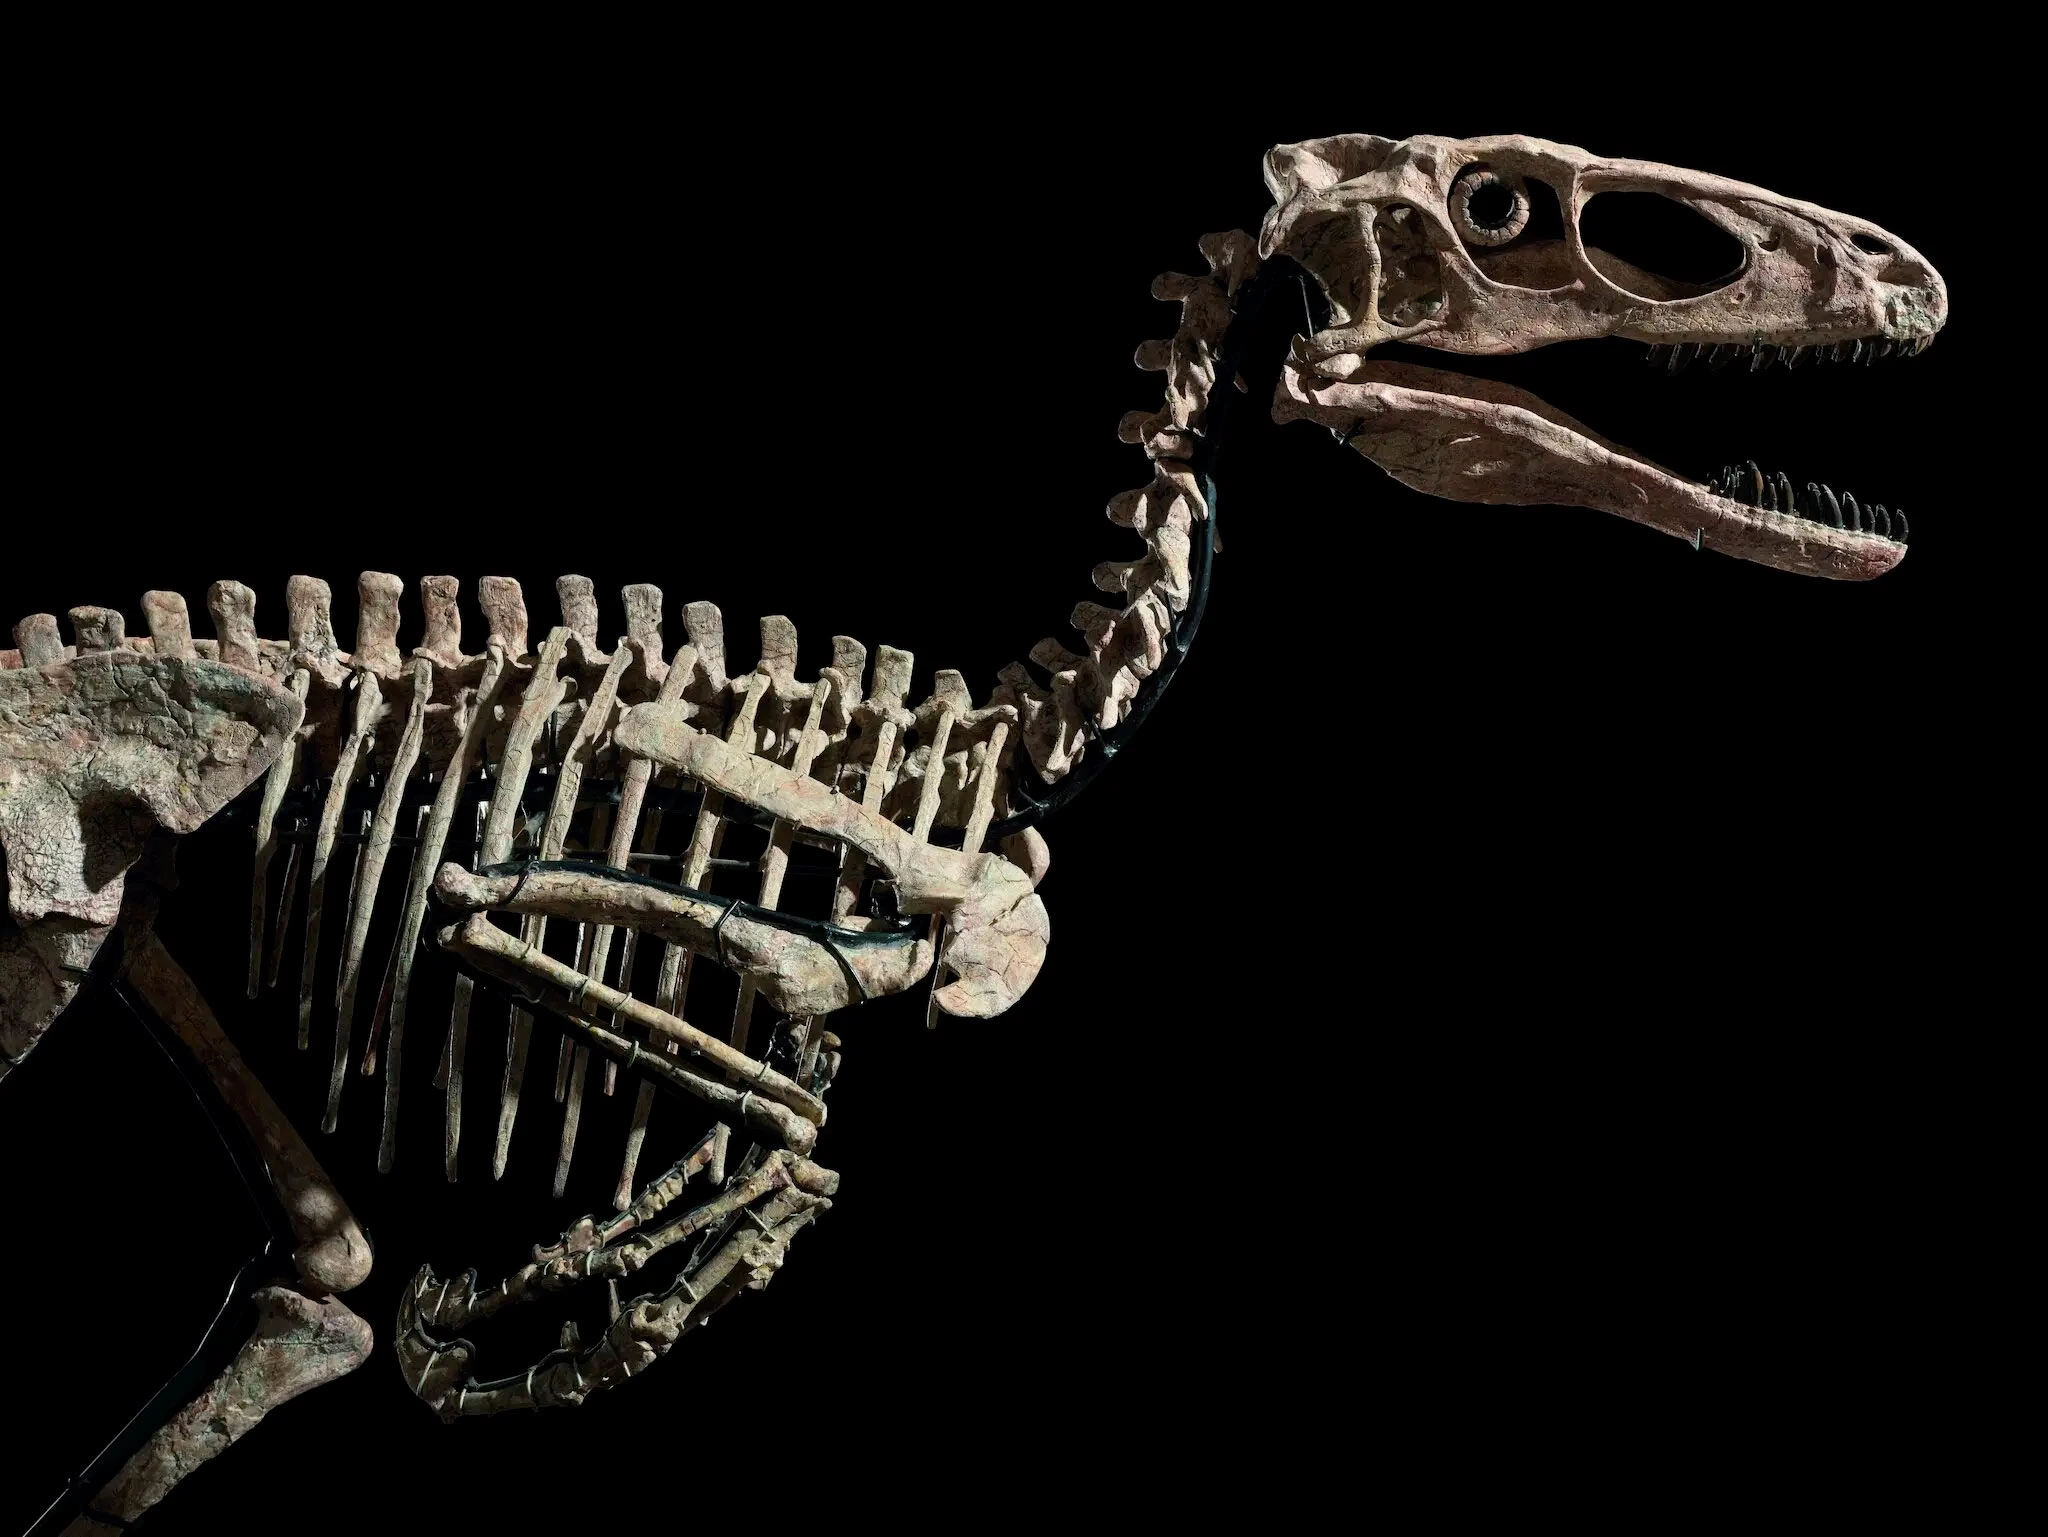 The Deinonychus antirrhopus specimen, nicknamed Hector, was discovered in Montana.